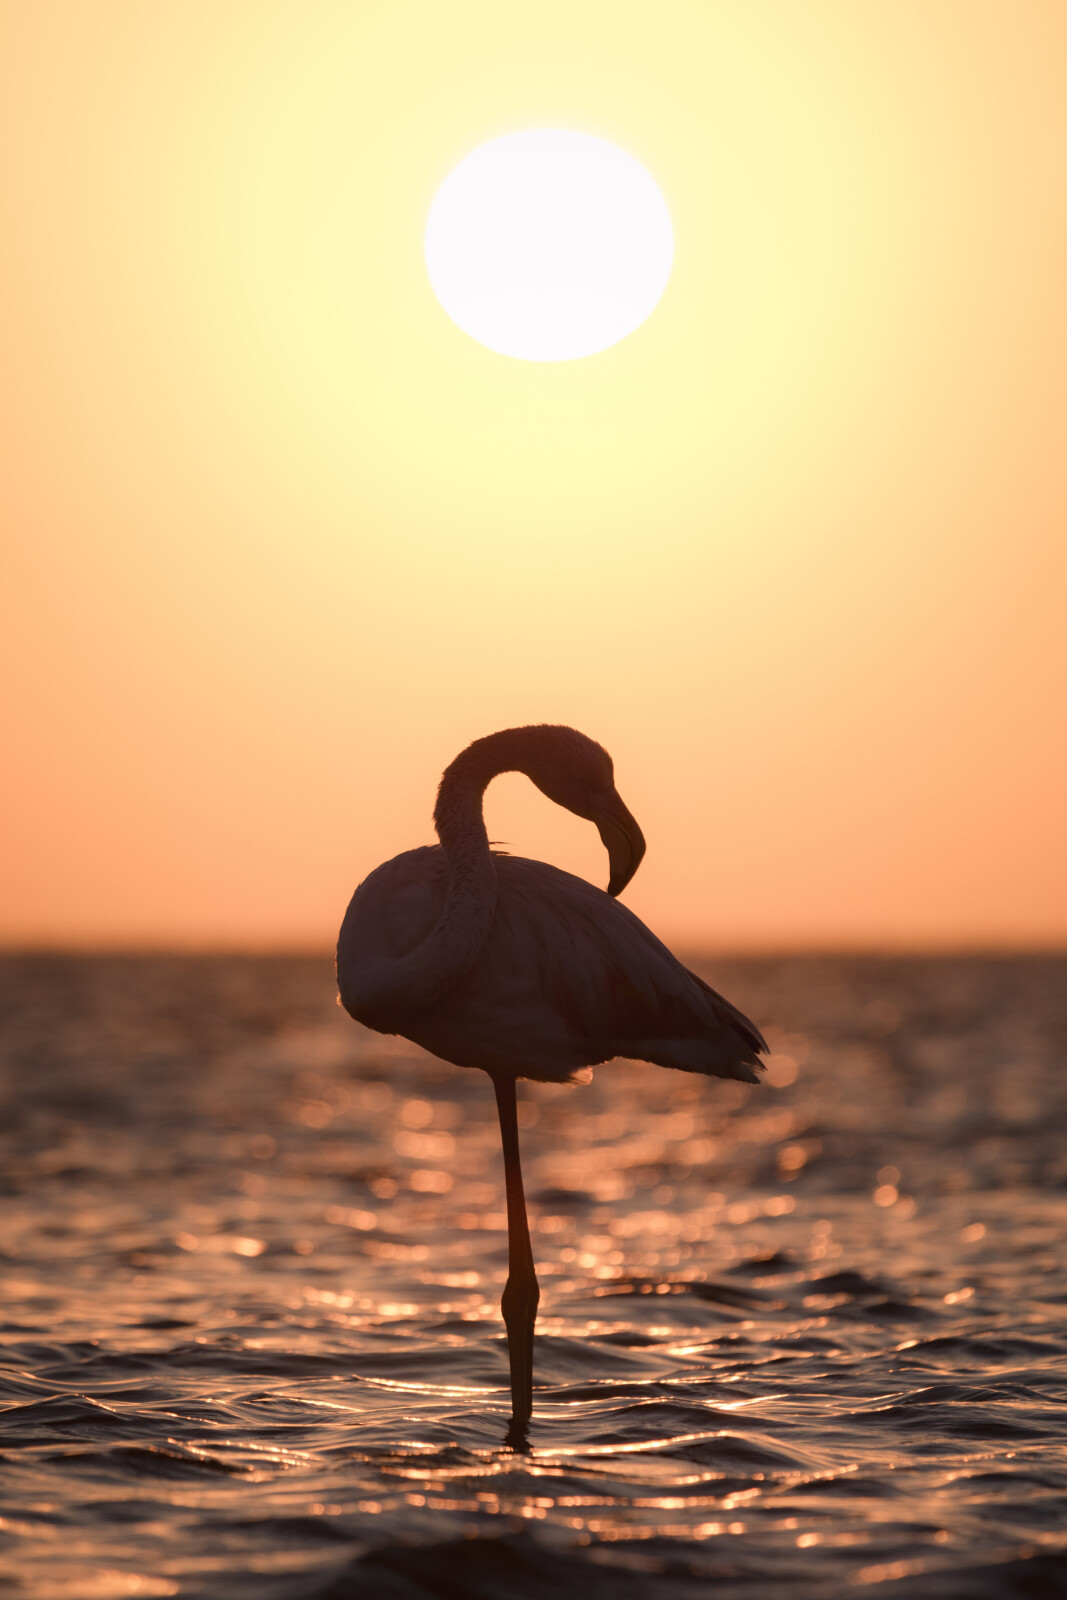 Darkness, Light and Flamingos...Flamingos??